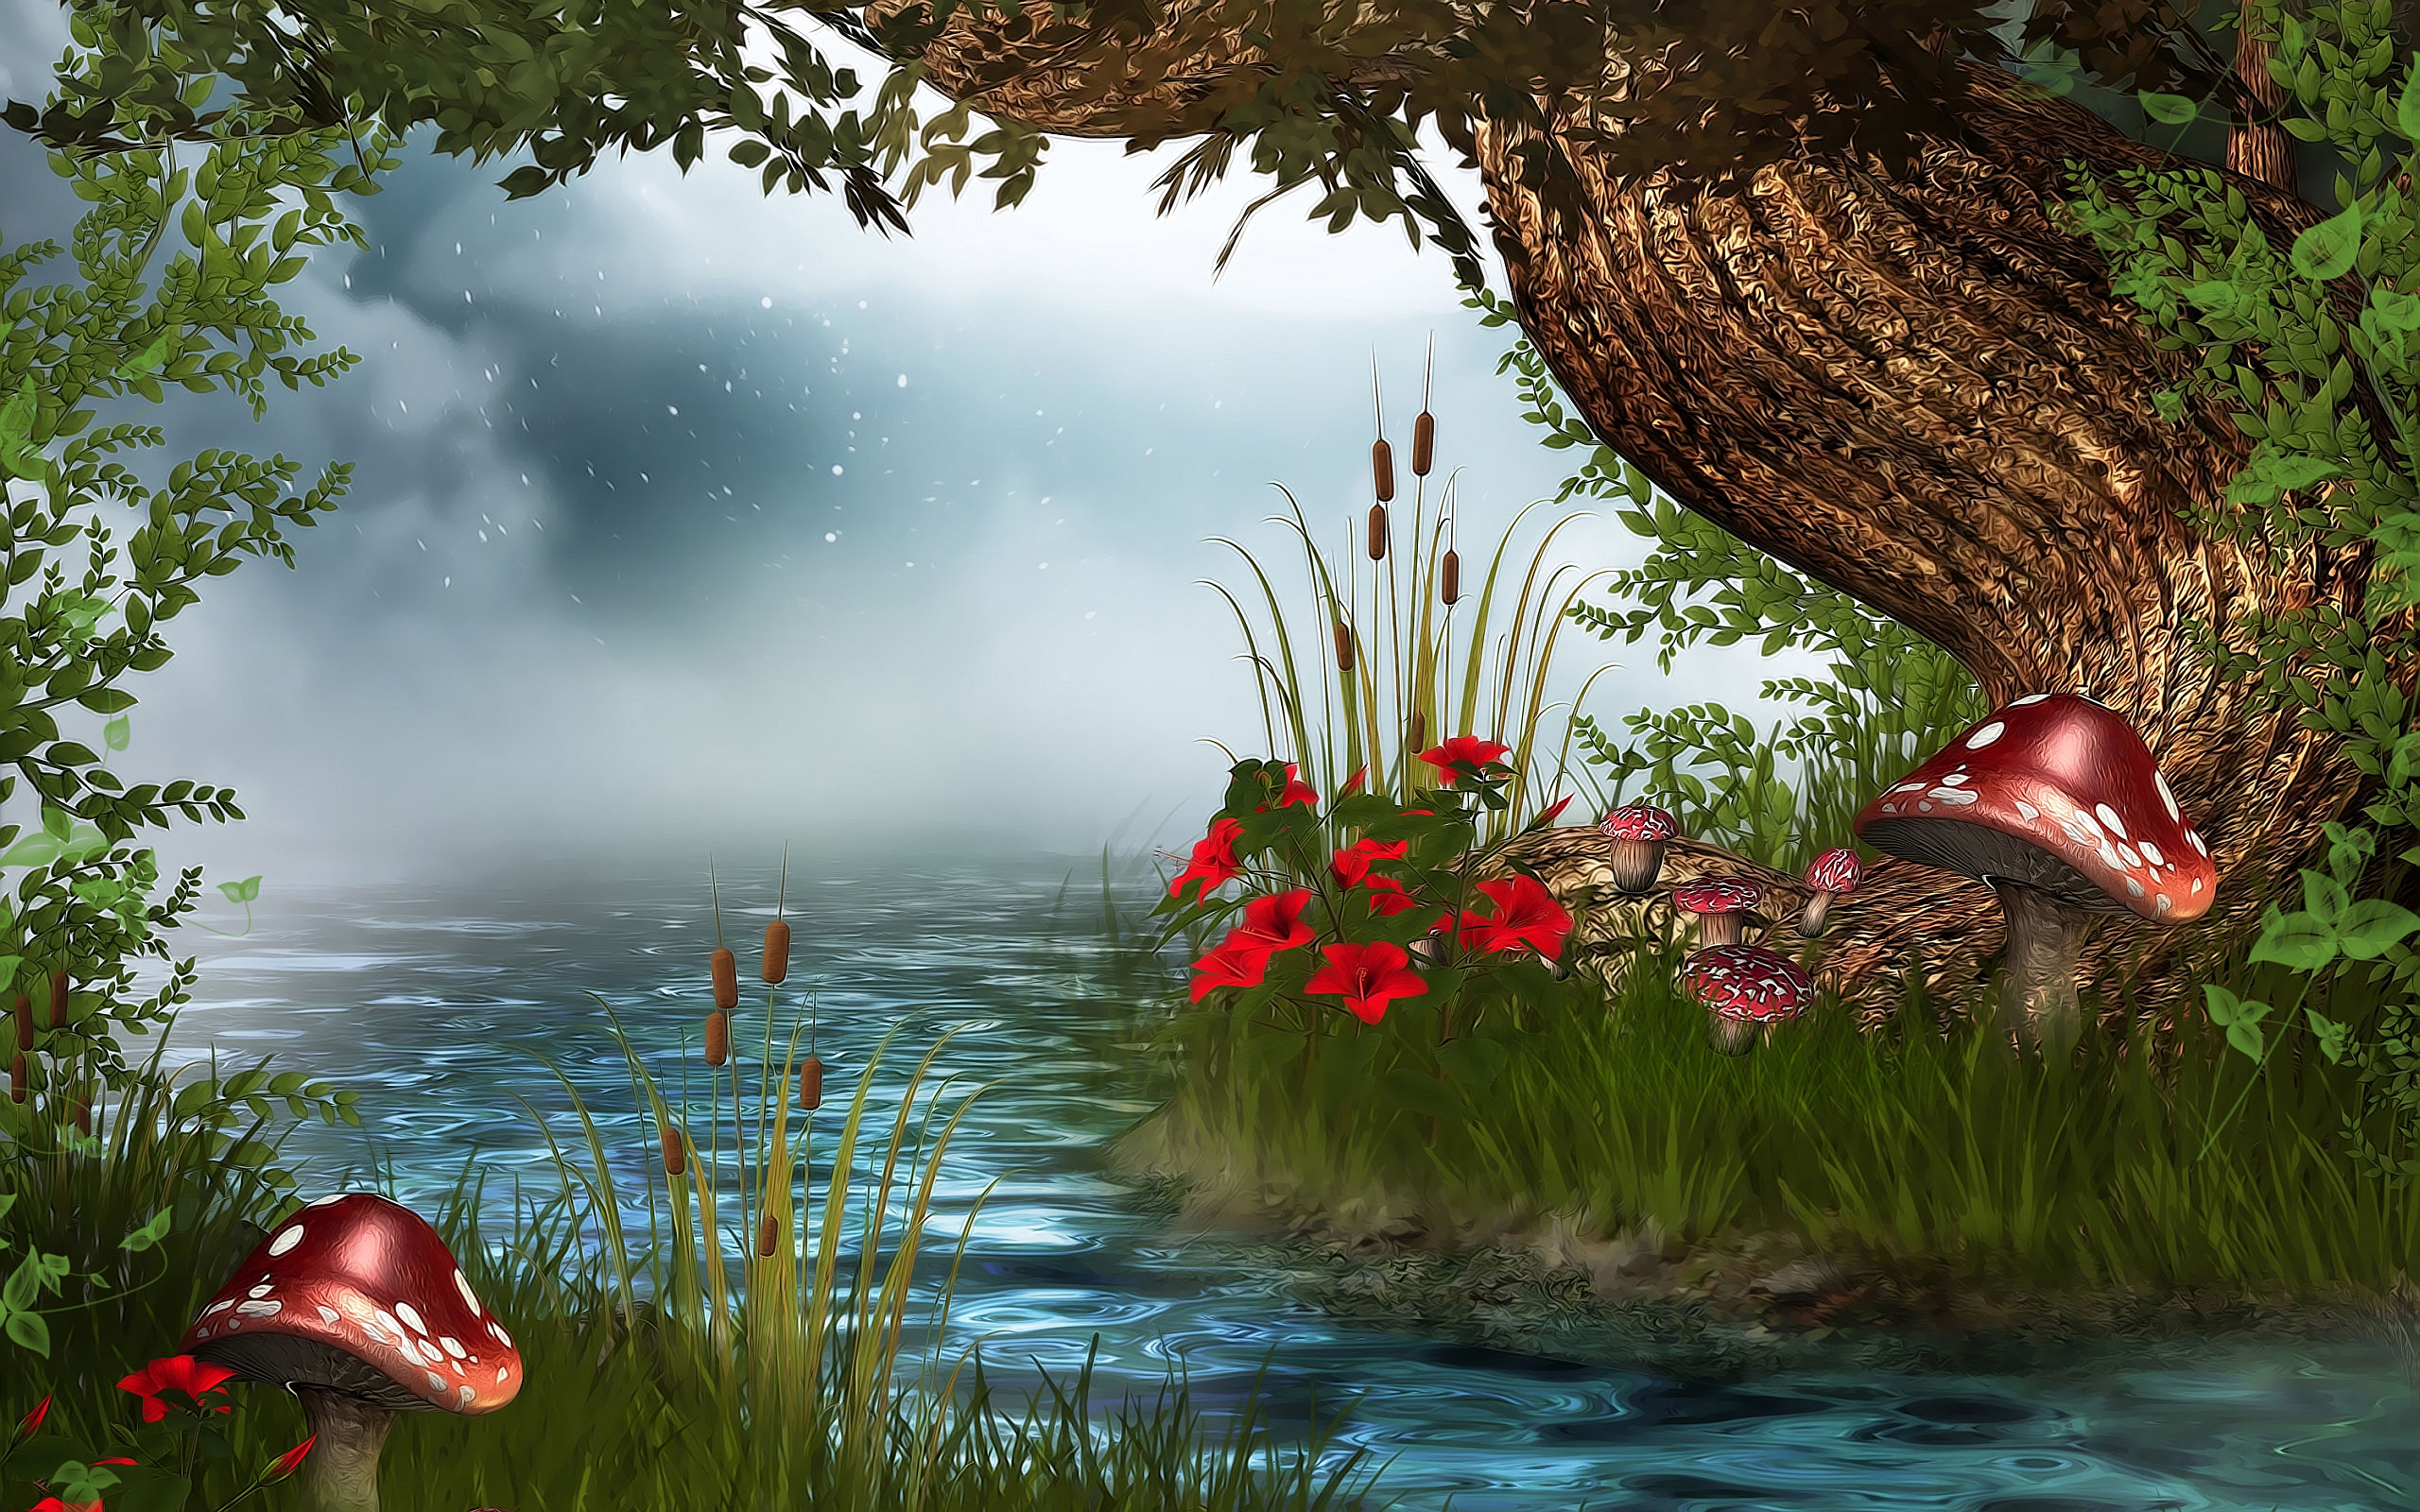 Fantasy artwork of mesmerizing scenery for a desktop wallpaper.